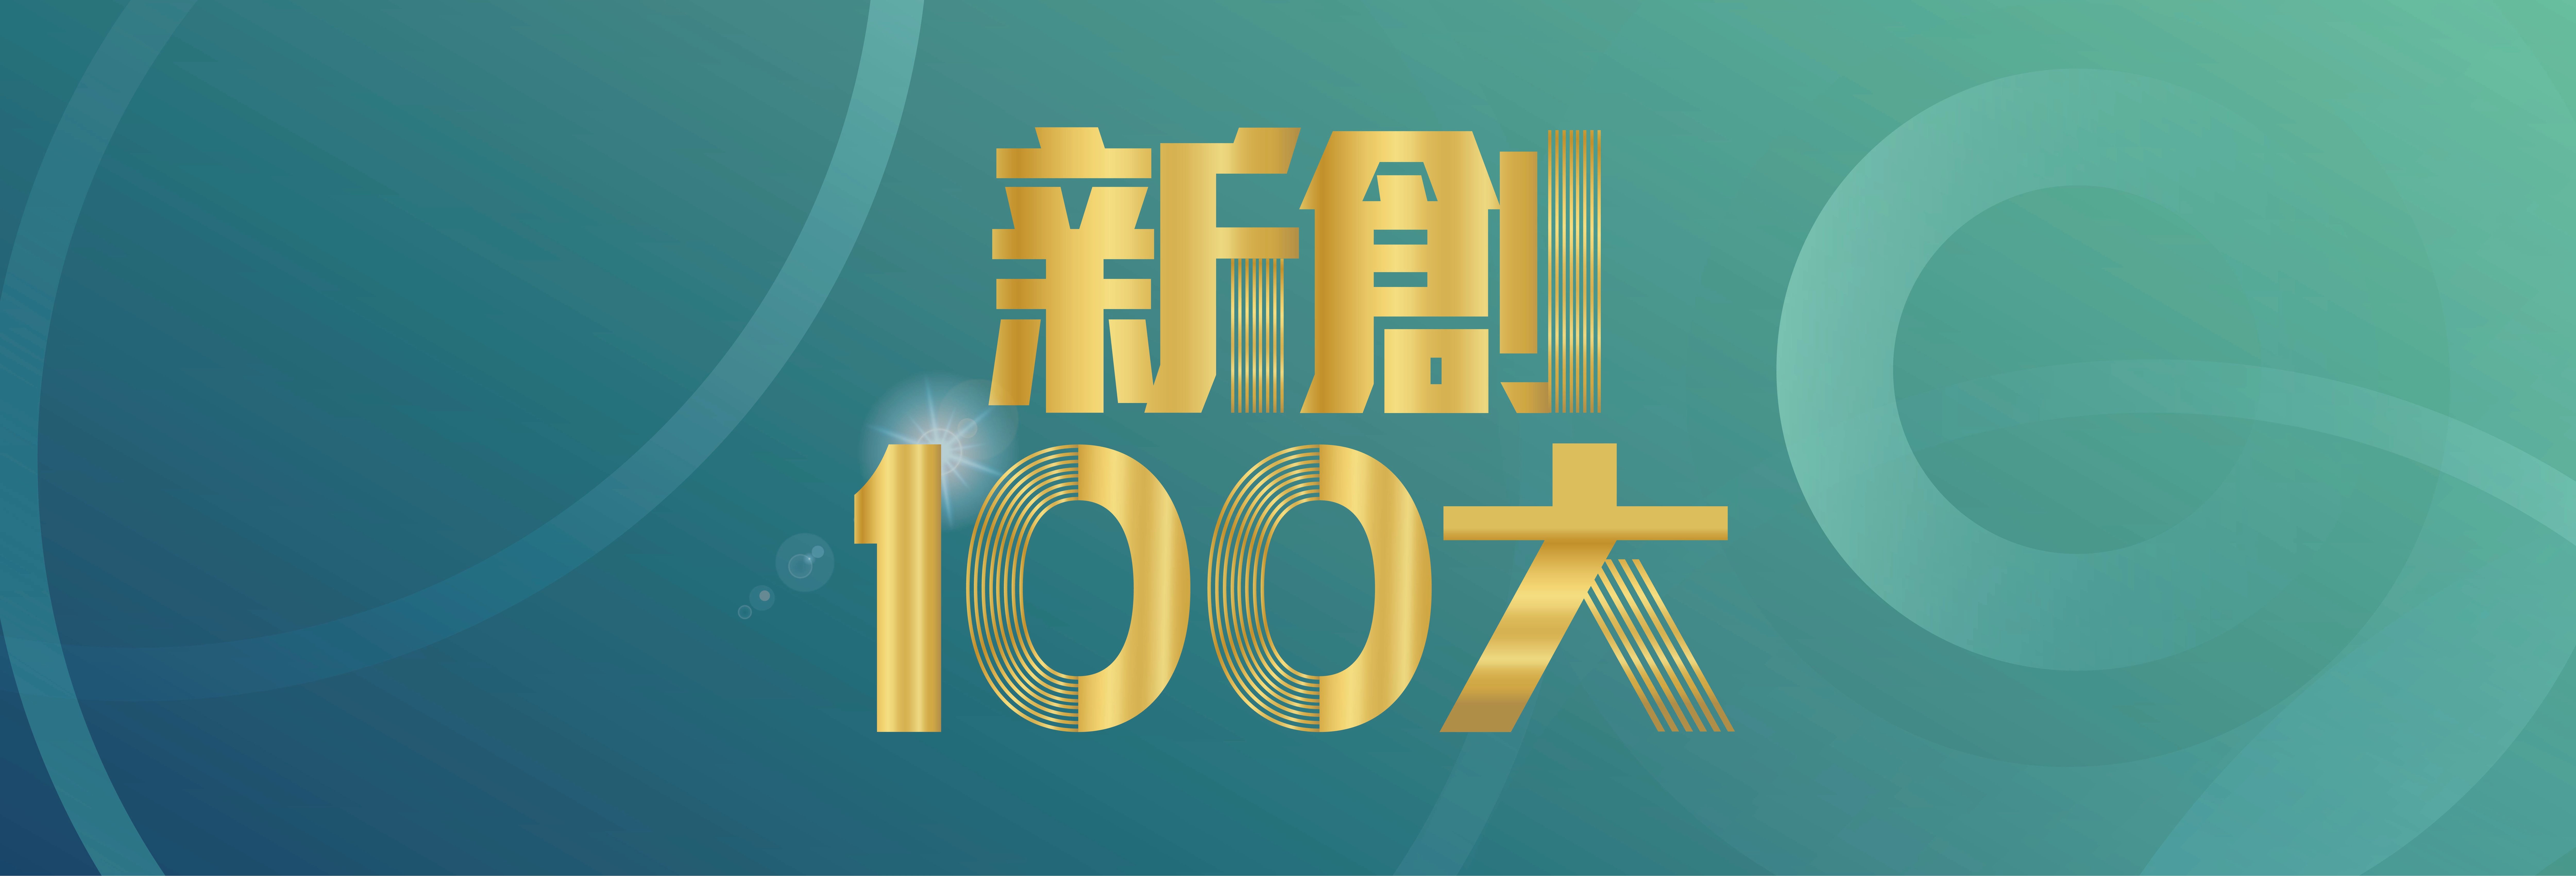 startup100 banner